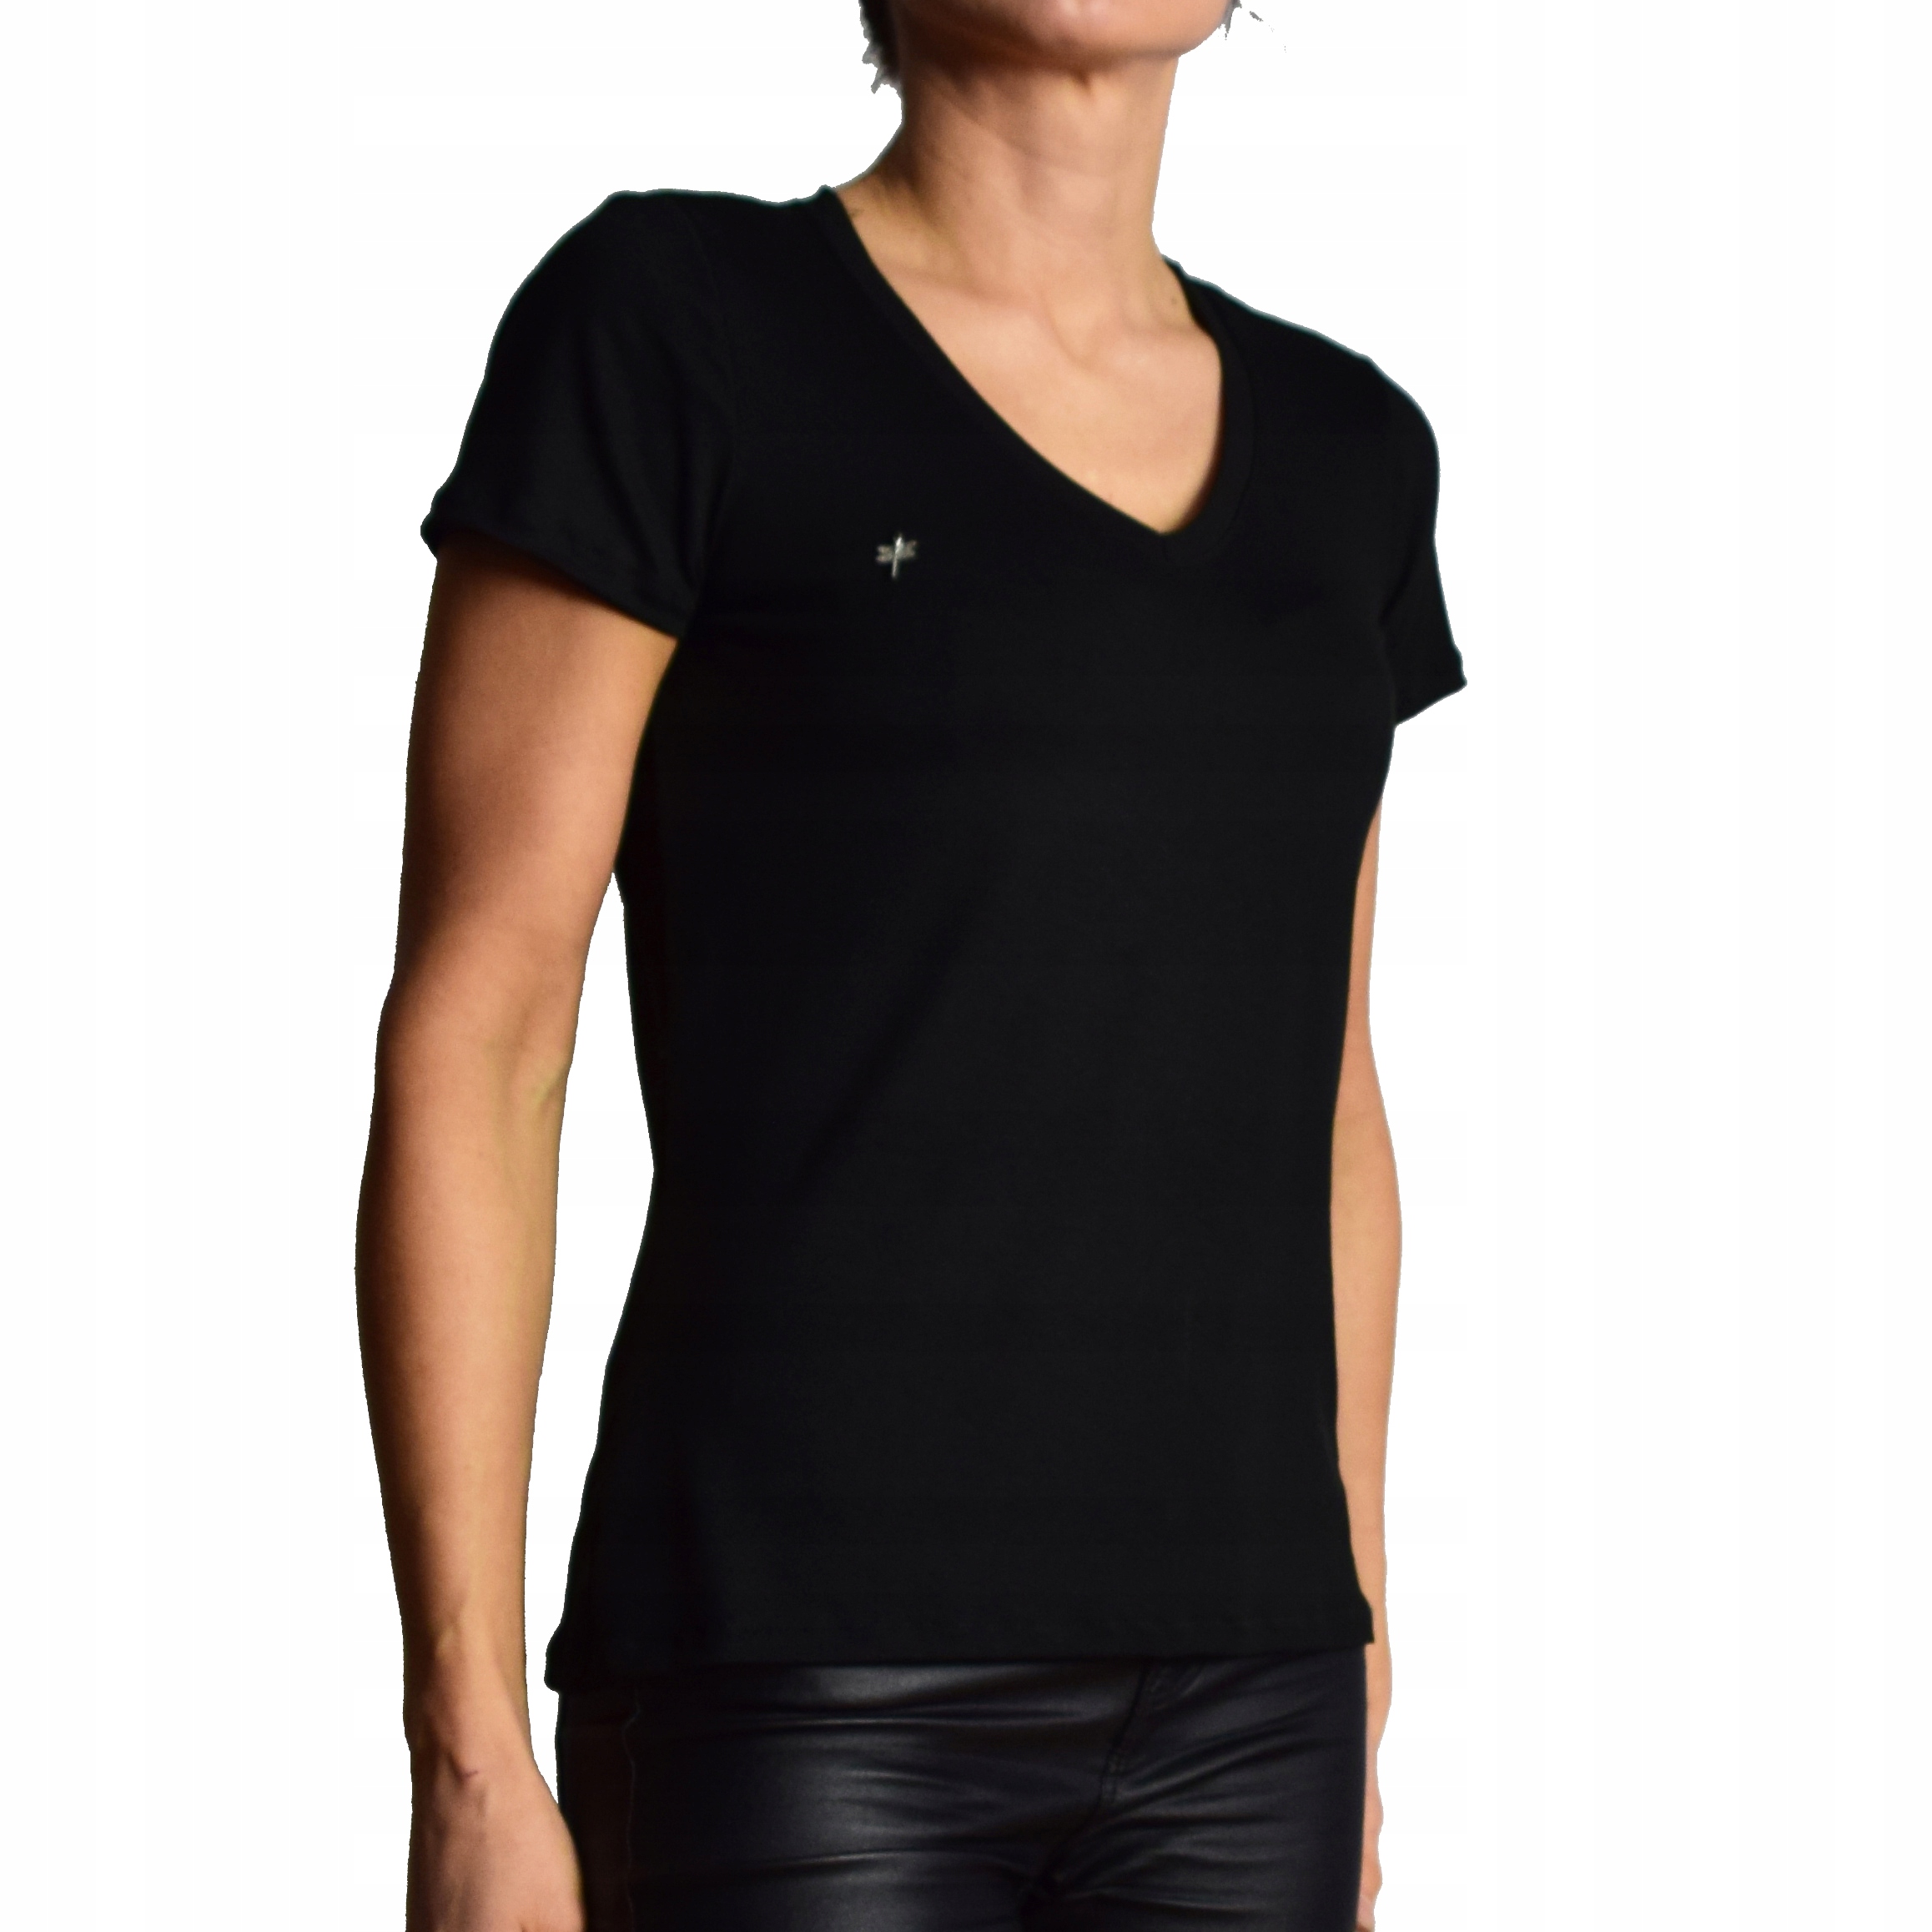 

Ważka koszulka bluzka czarna Collibri 969 XL